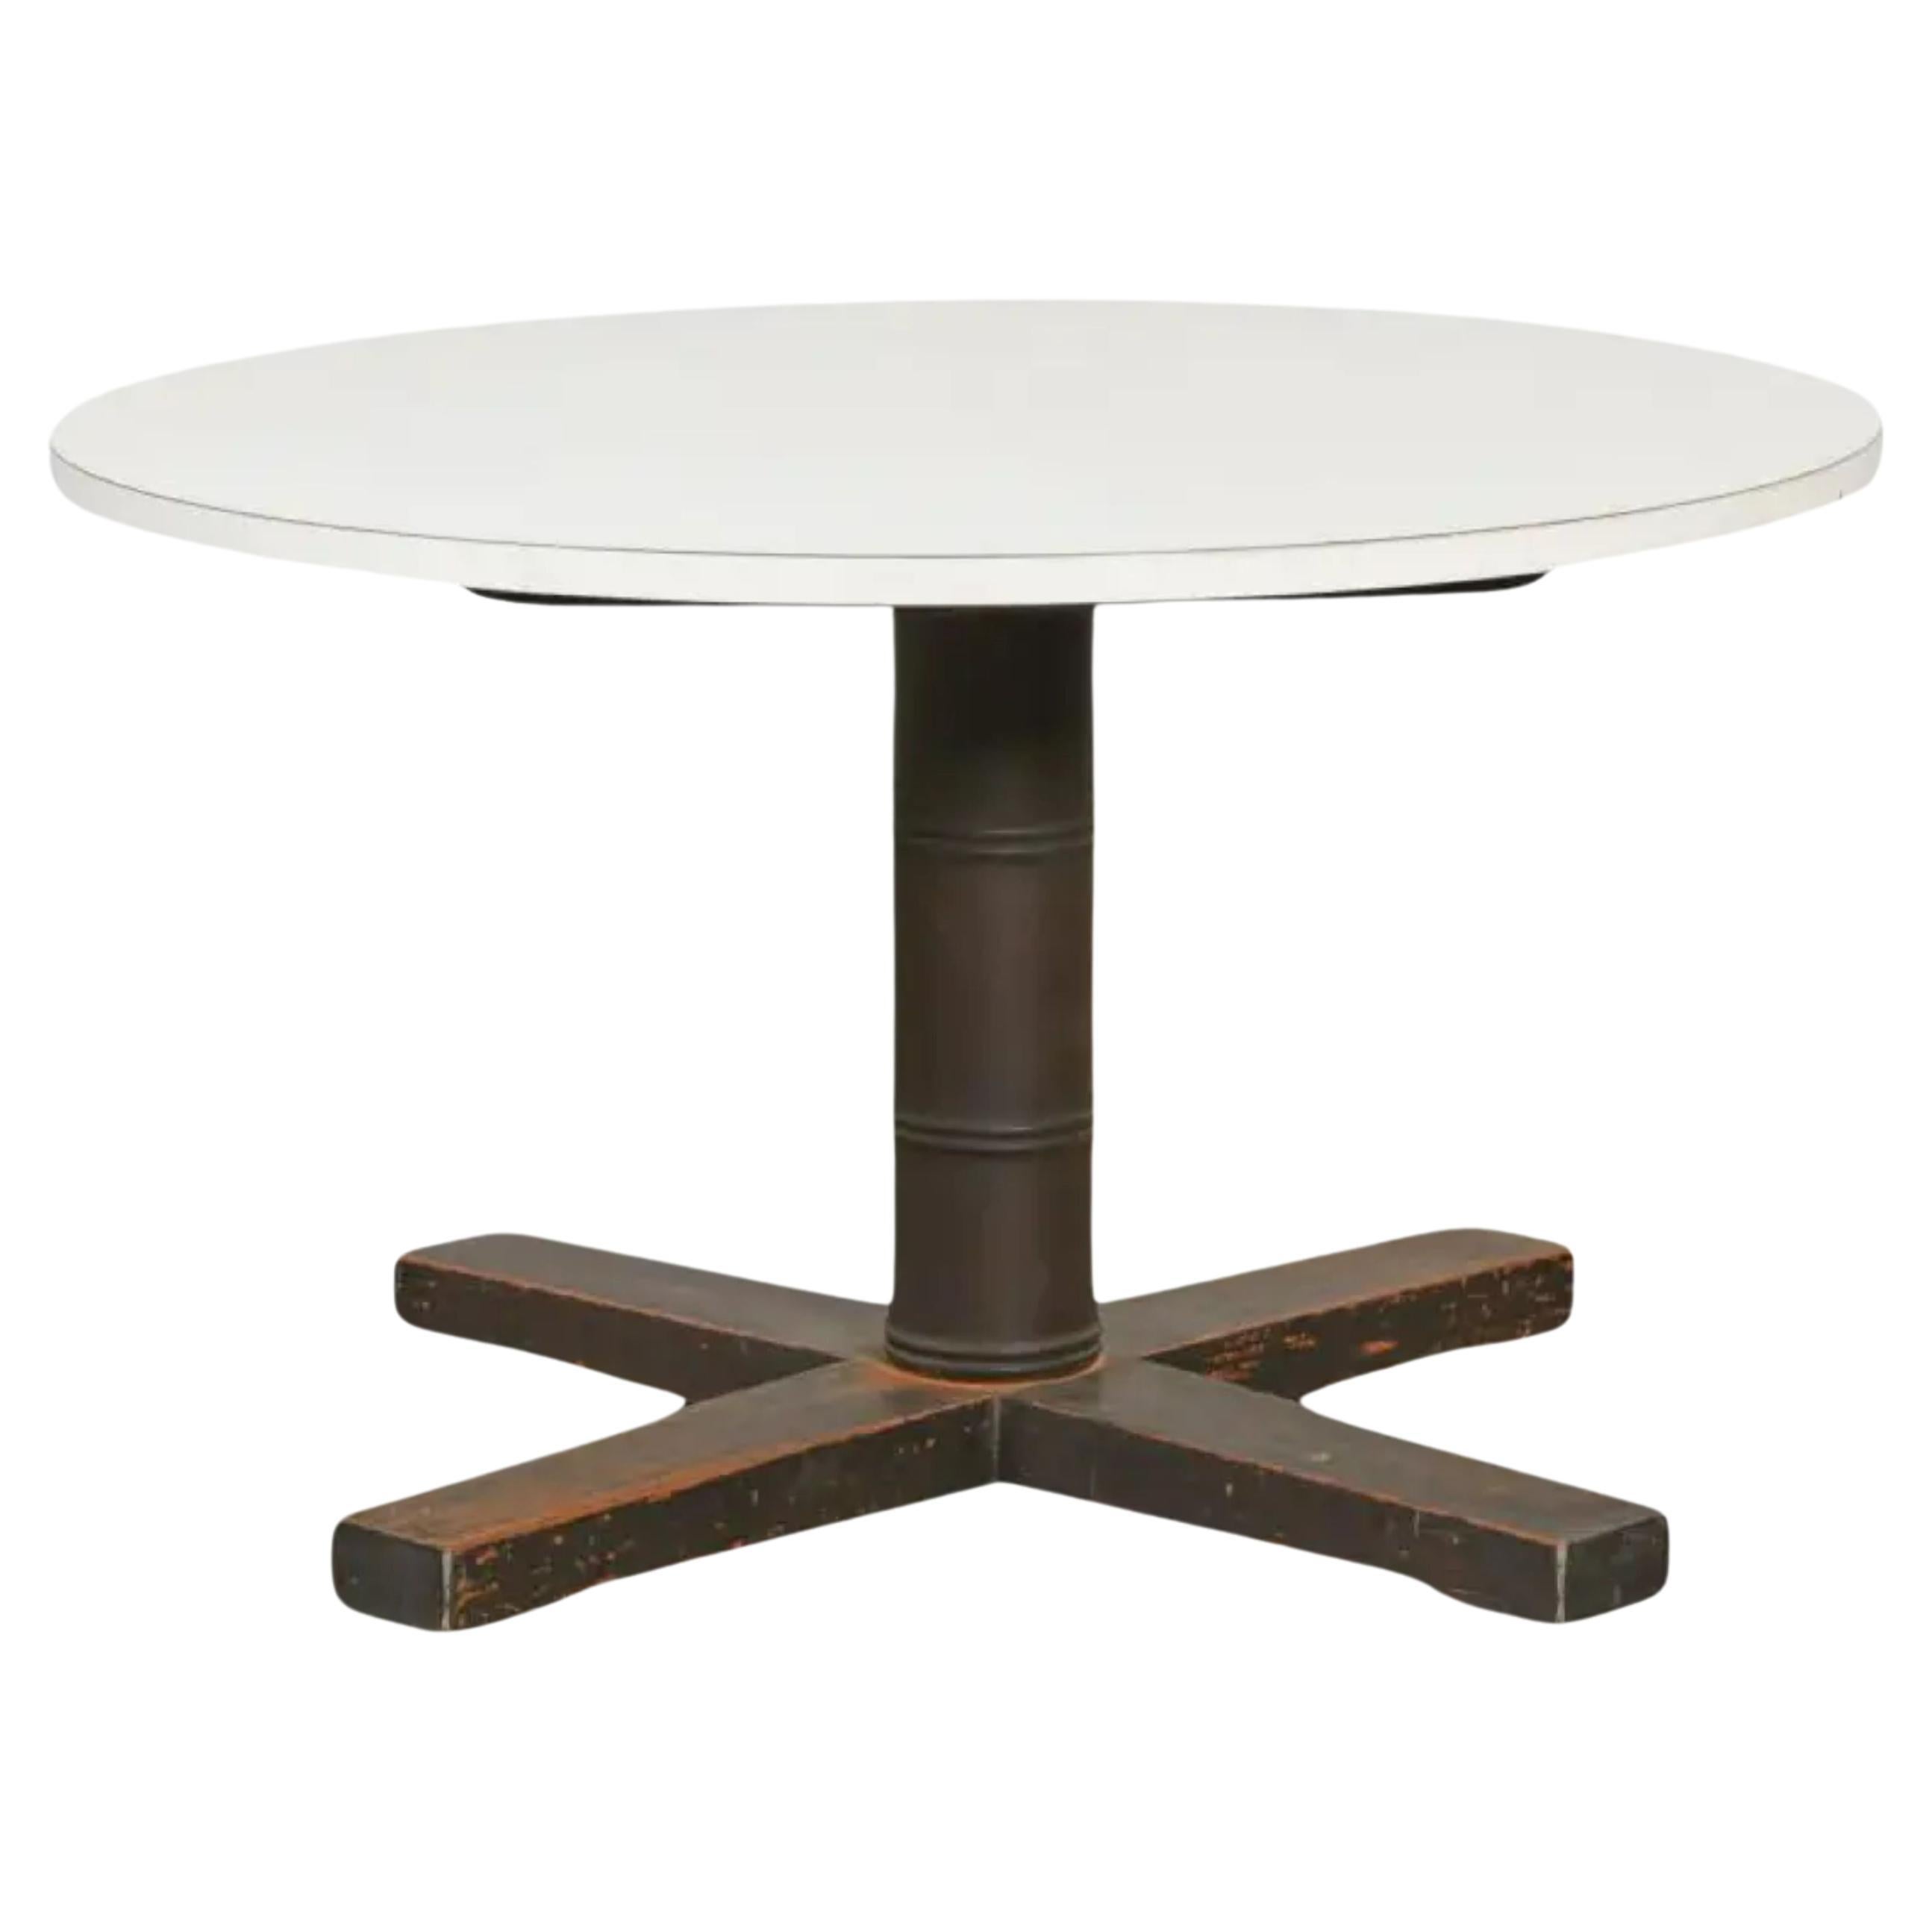 McGuire Furniture Company Pedestal Table, 2010s